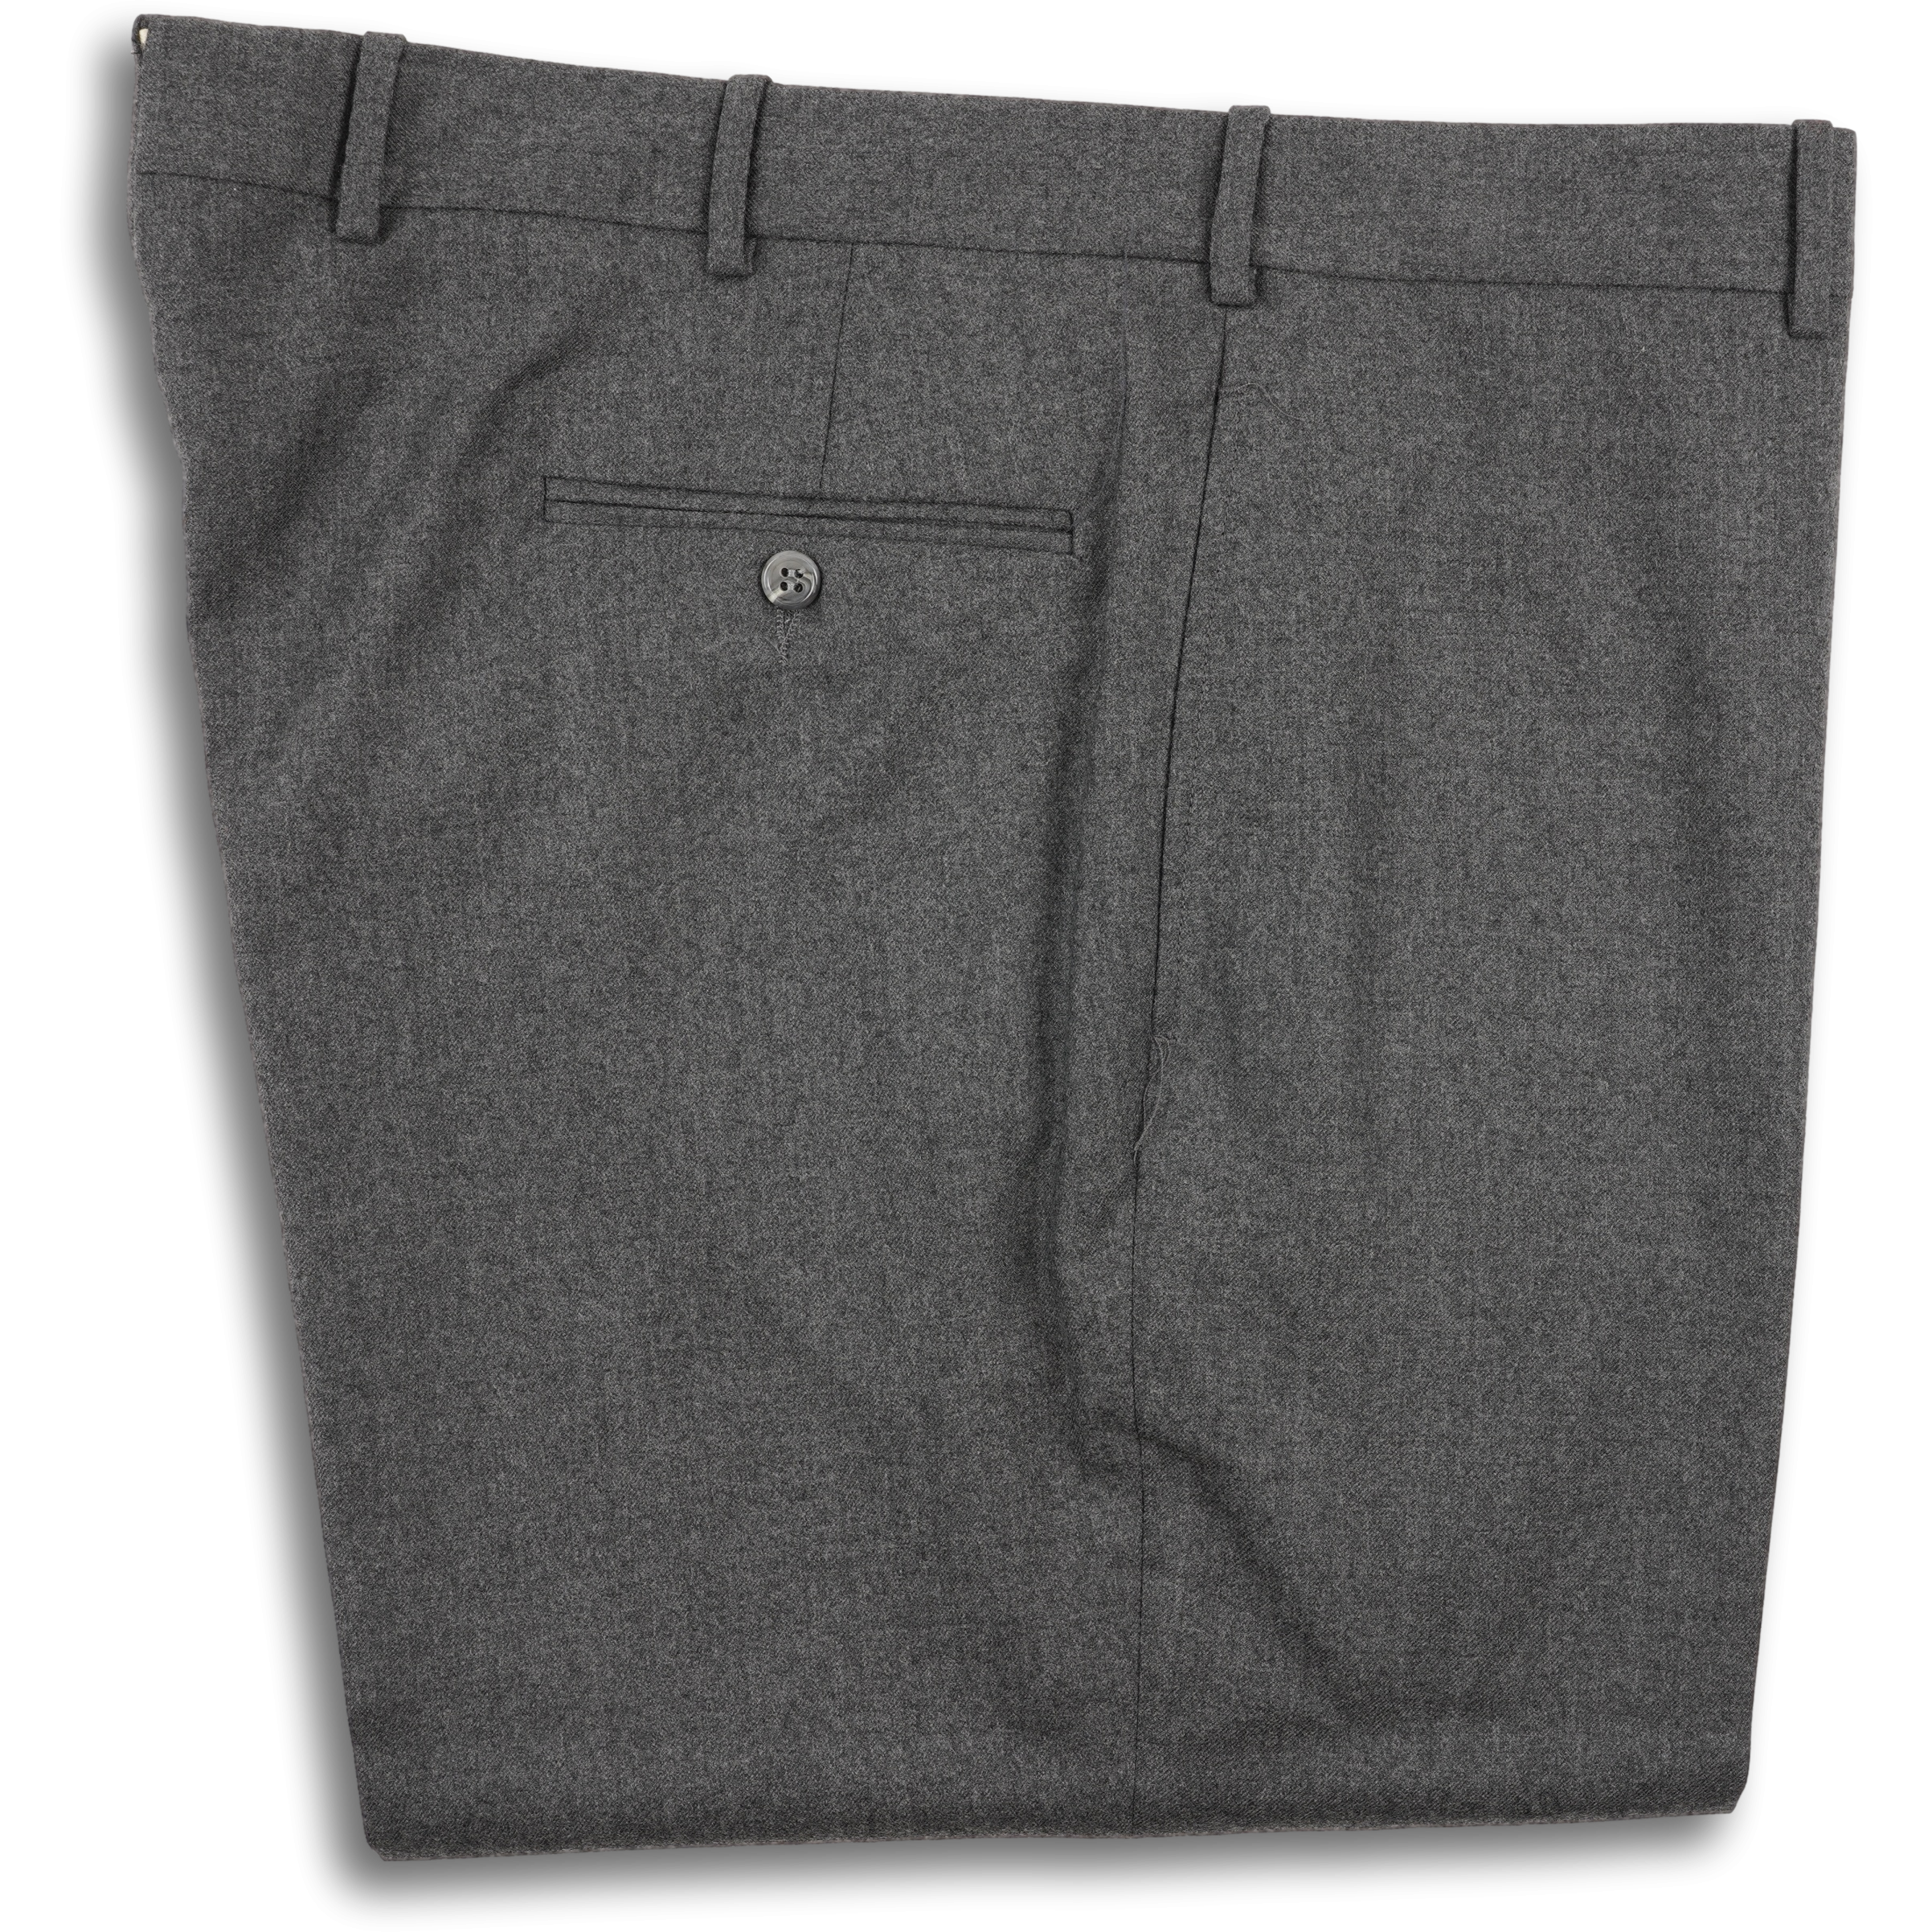 Men's Concepts Sport Royal/Black Kentucky Wildcats Ultimate Flannel Pants